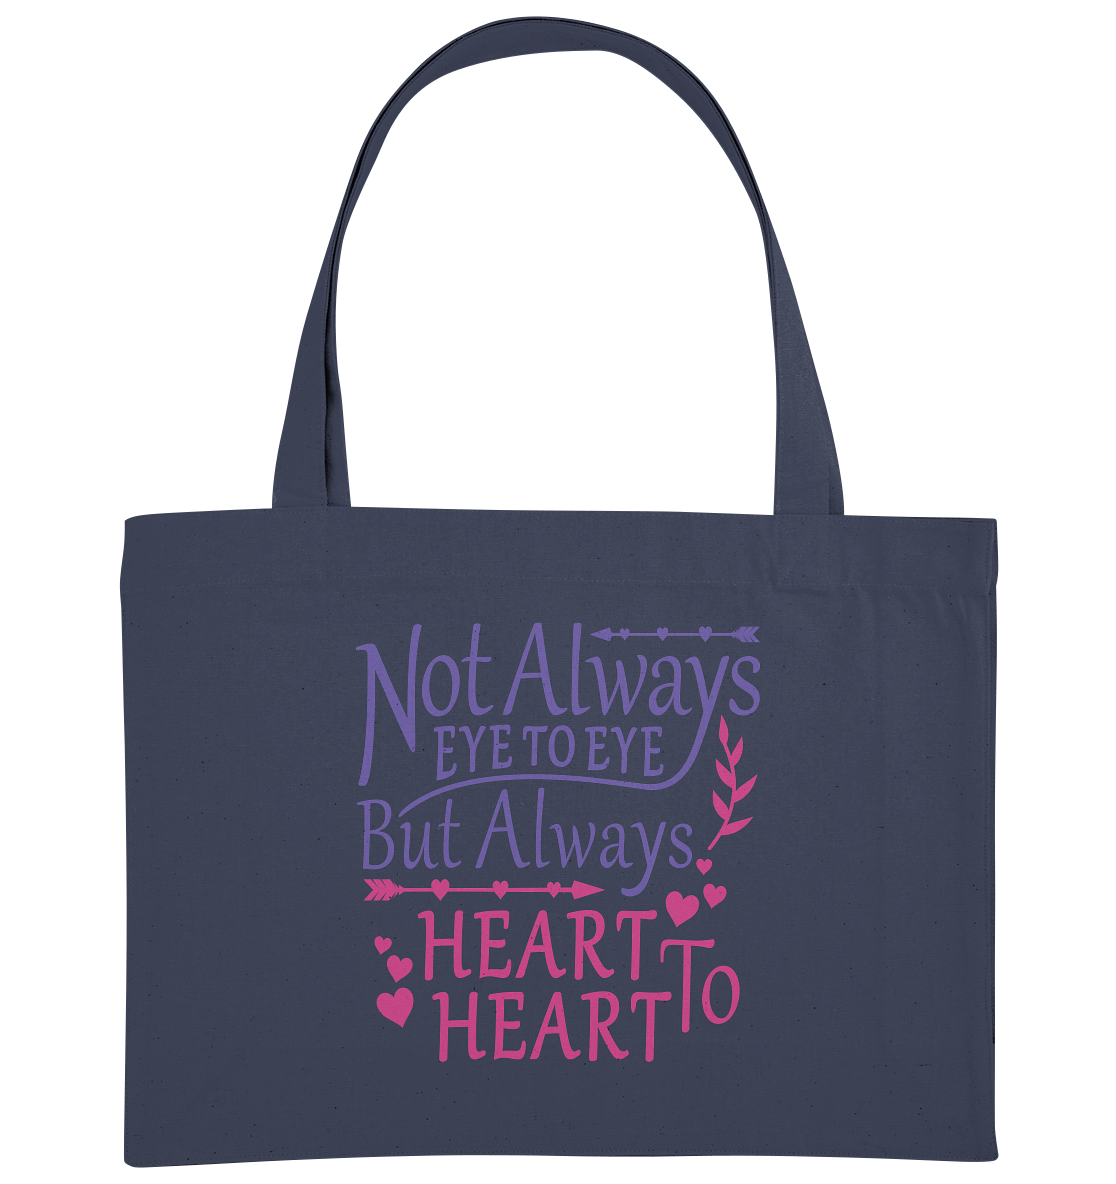 Not always eye to eye but always heart to heart - organic shopping bag